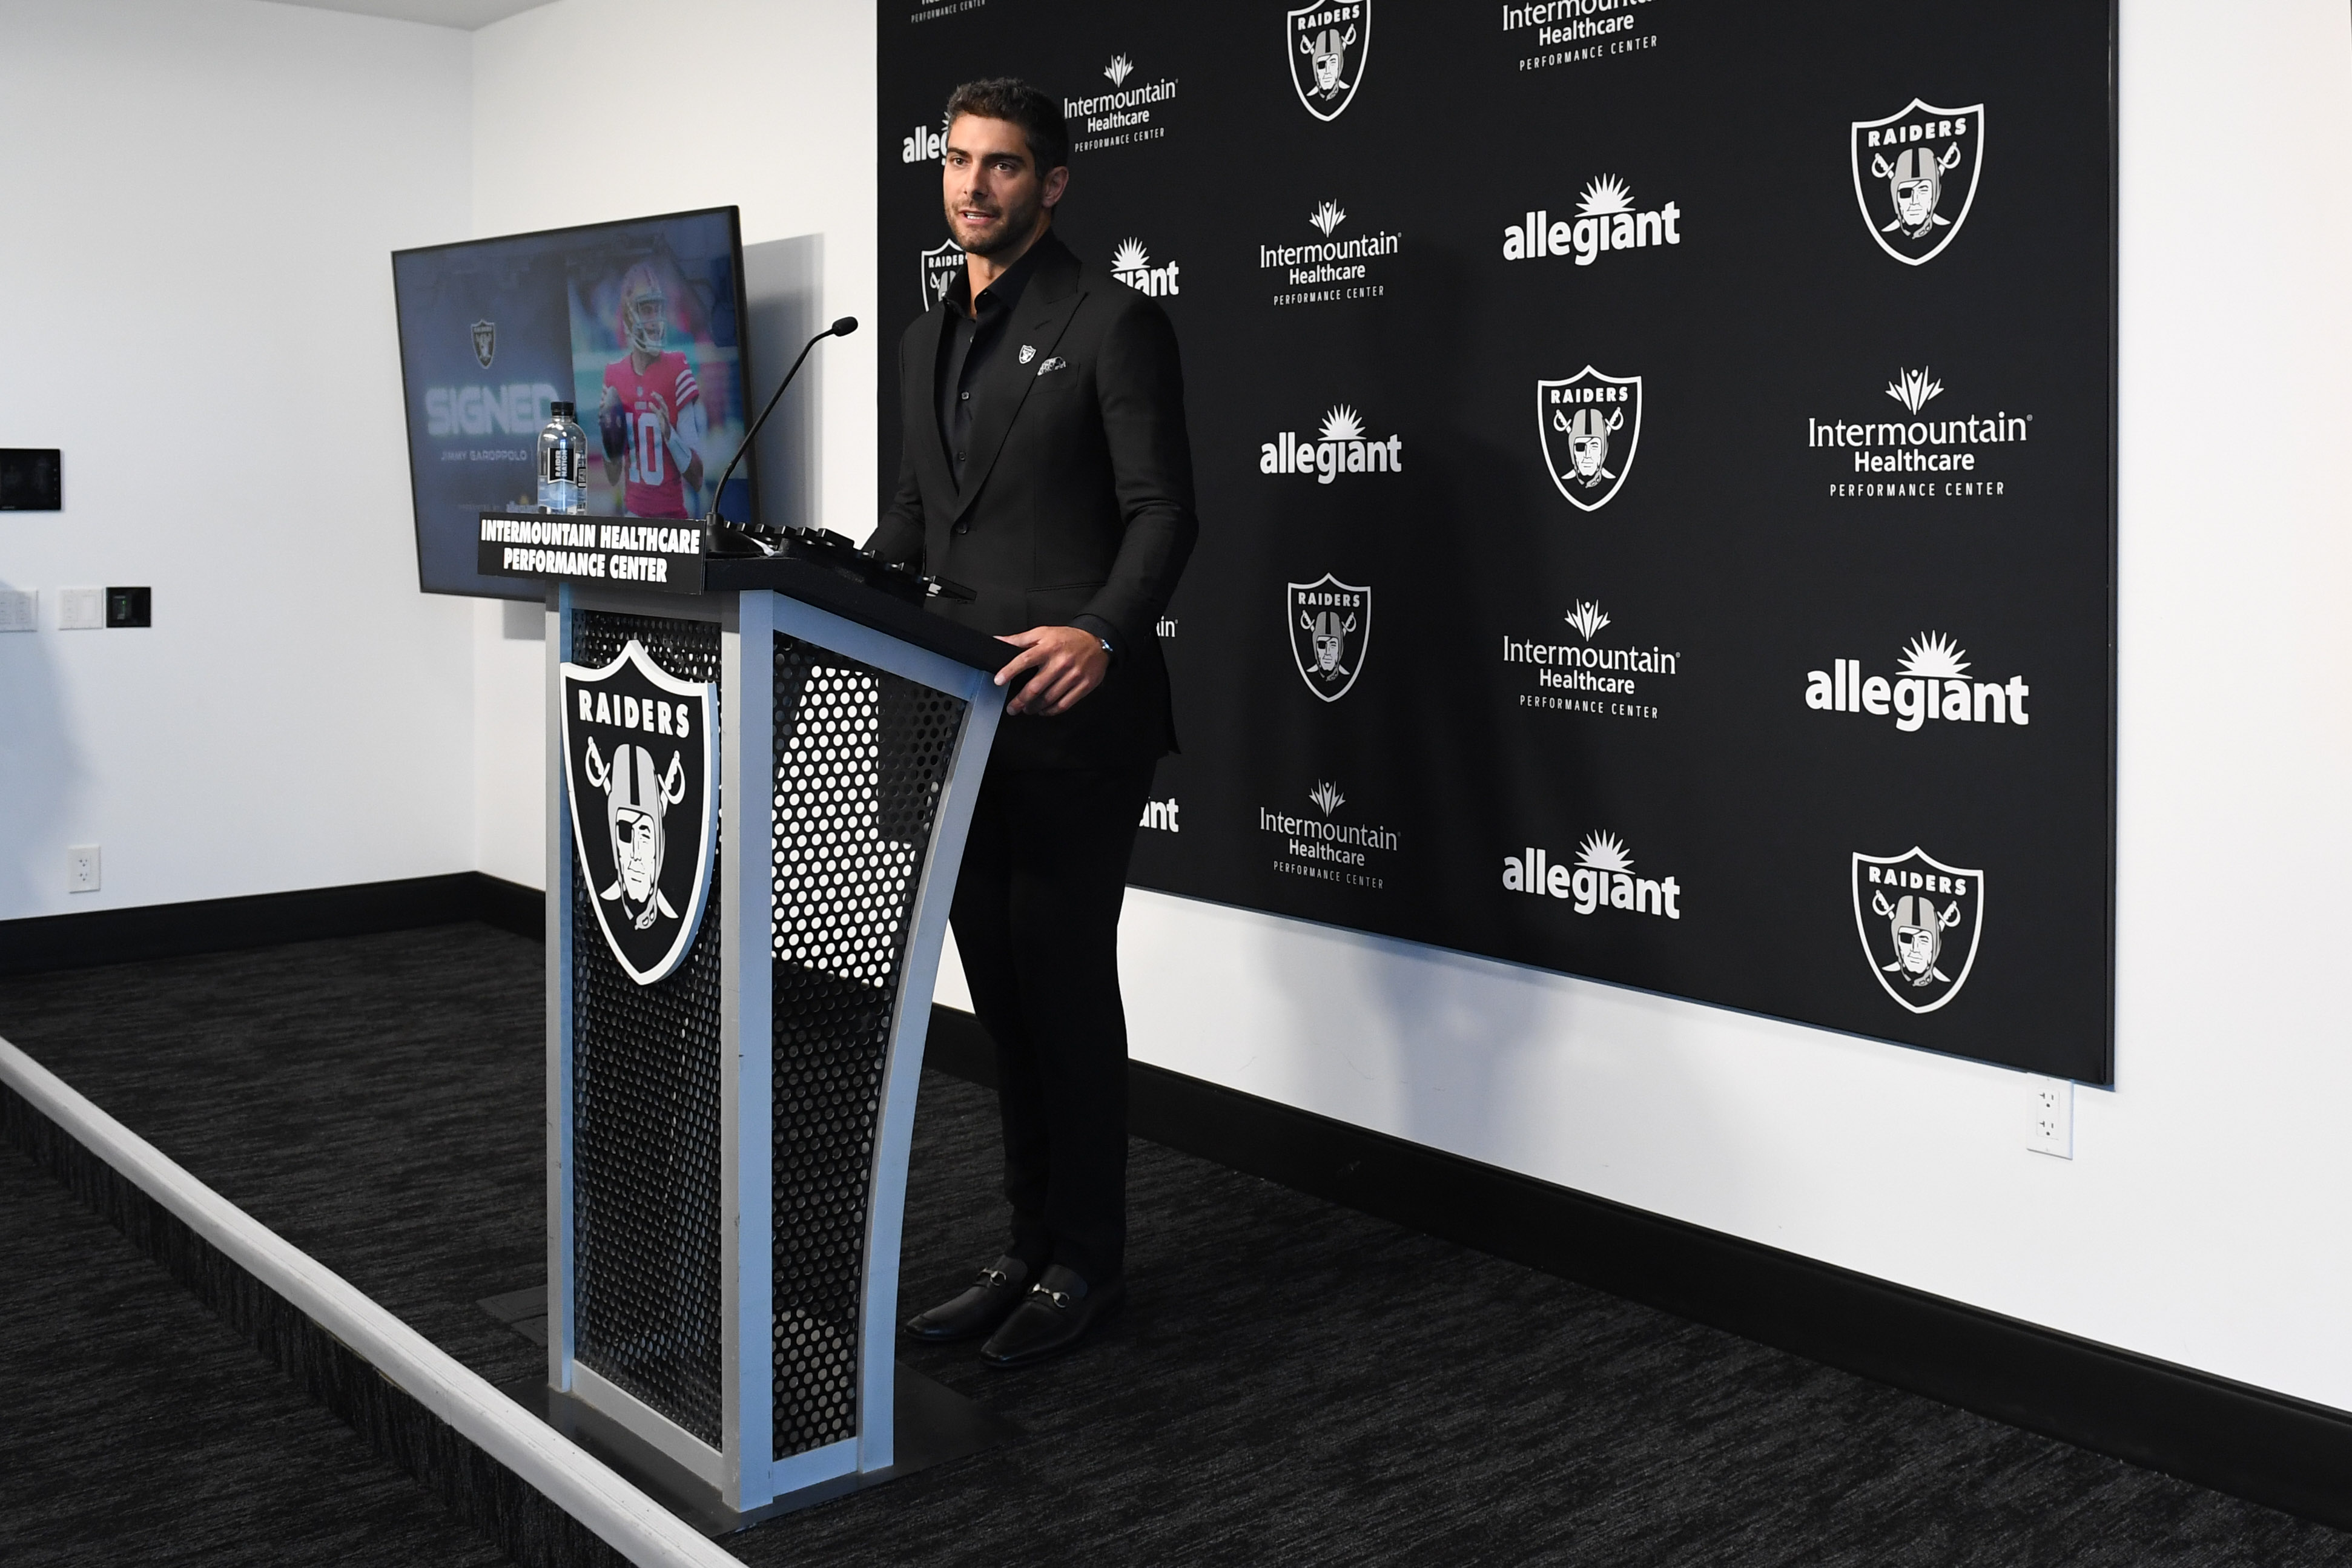 NFL: Las Vegas Raiders Press Conference